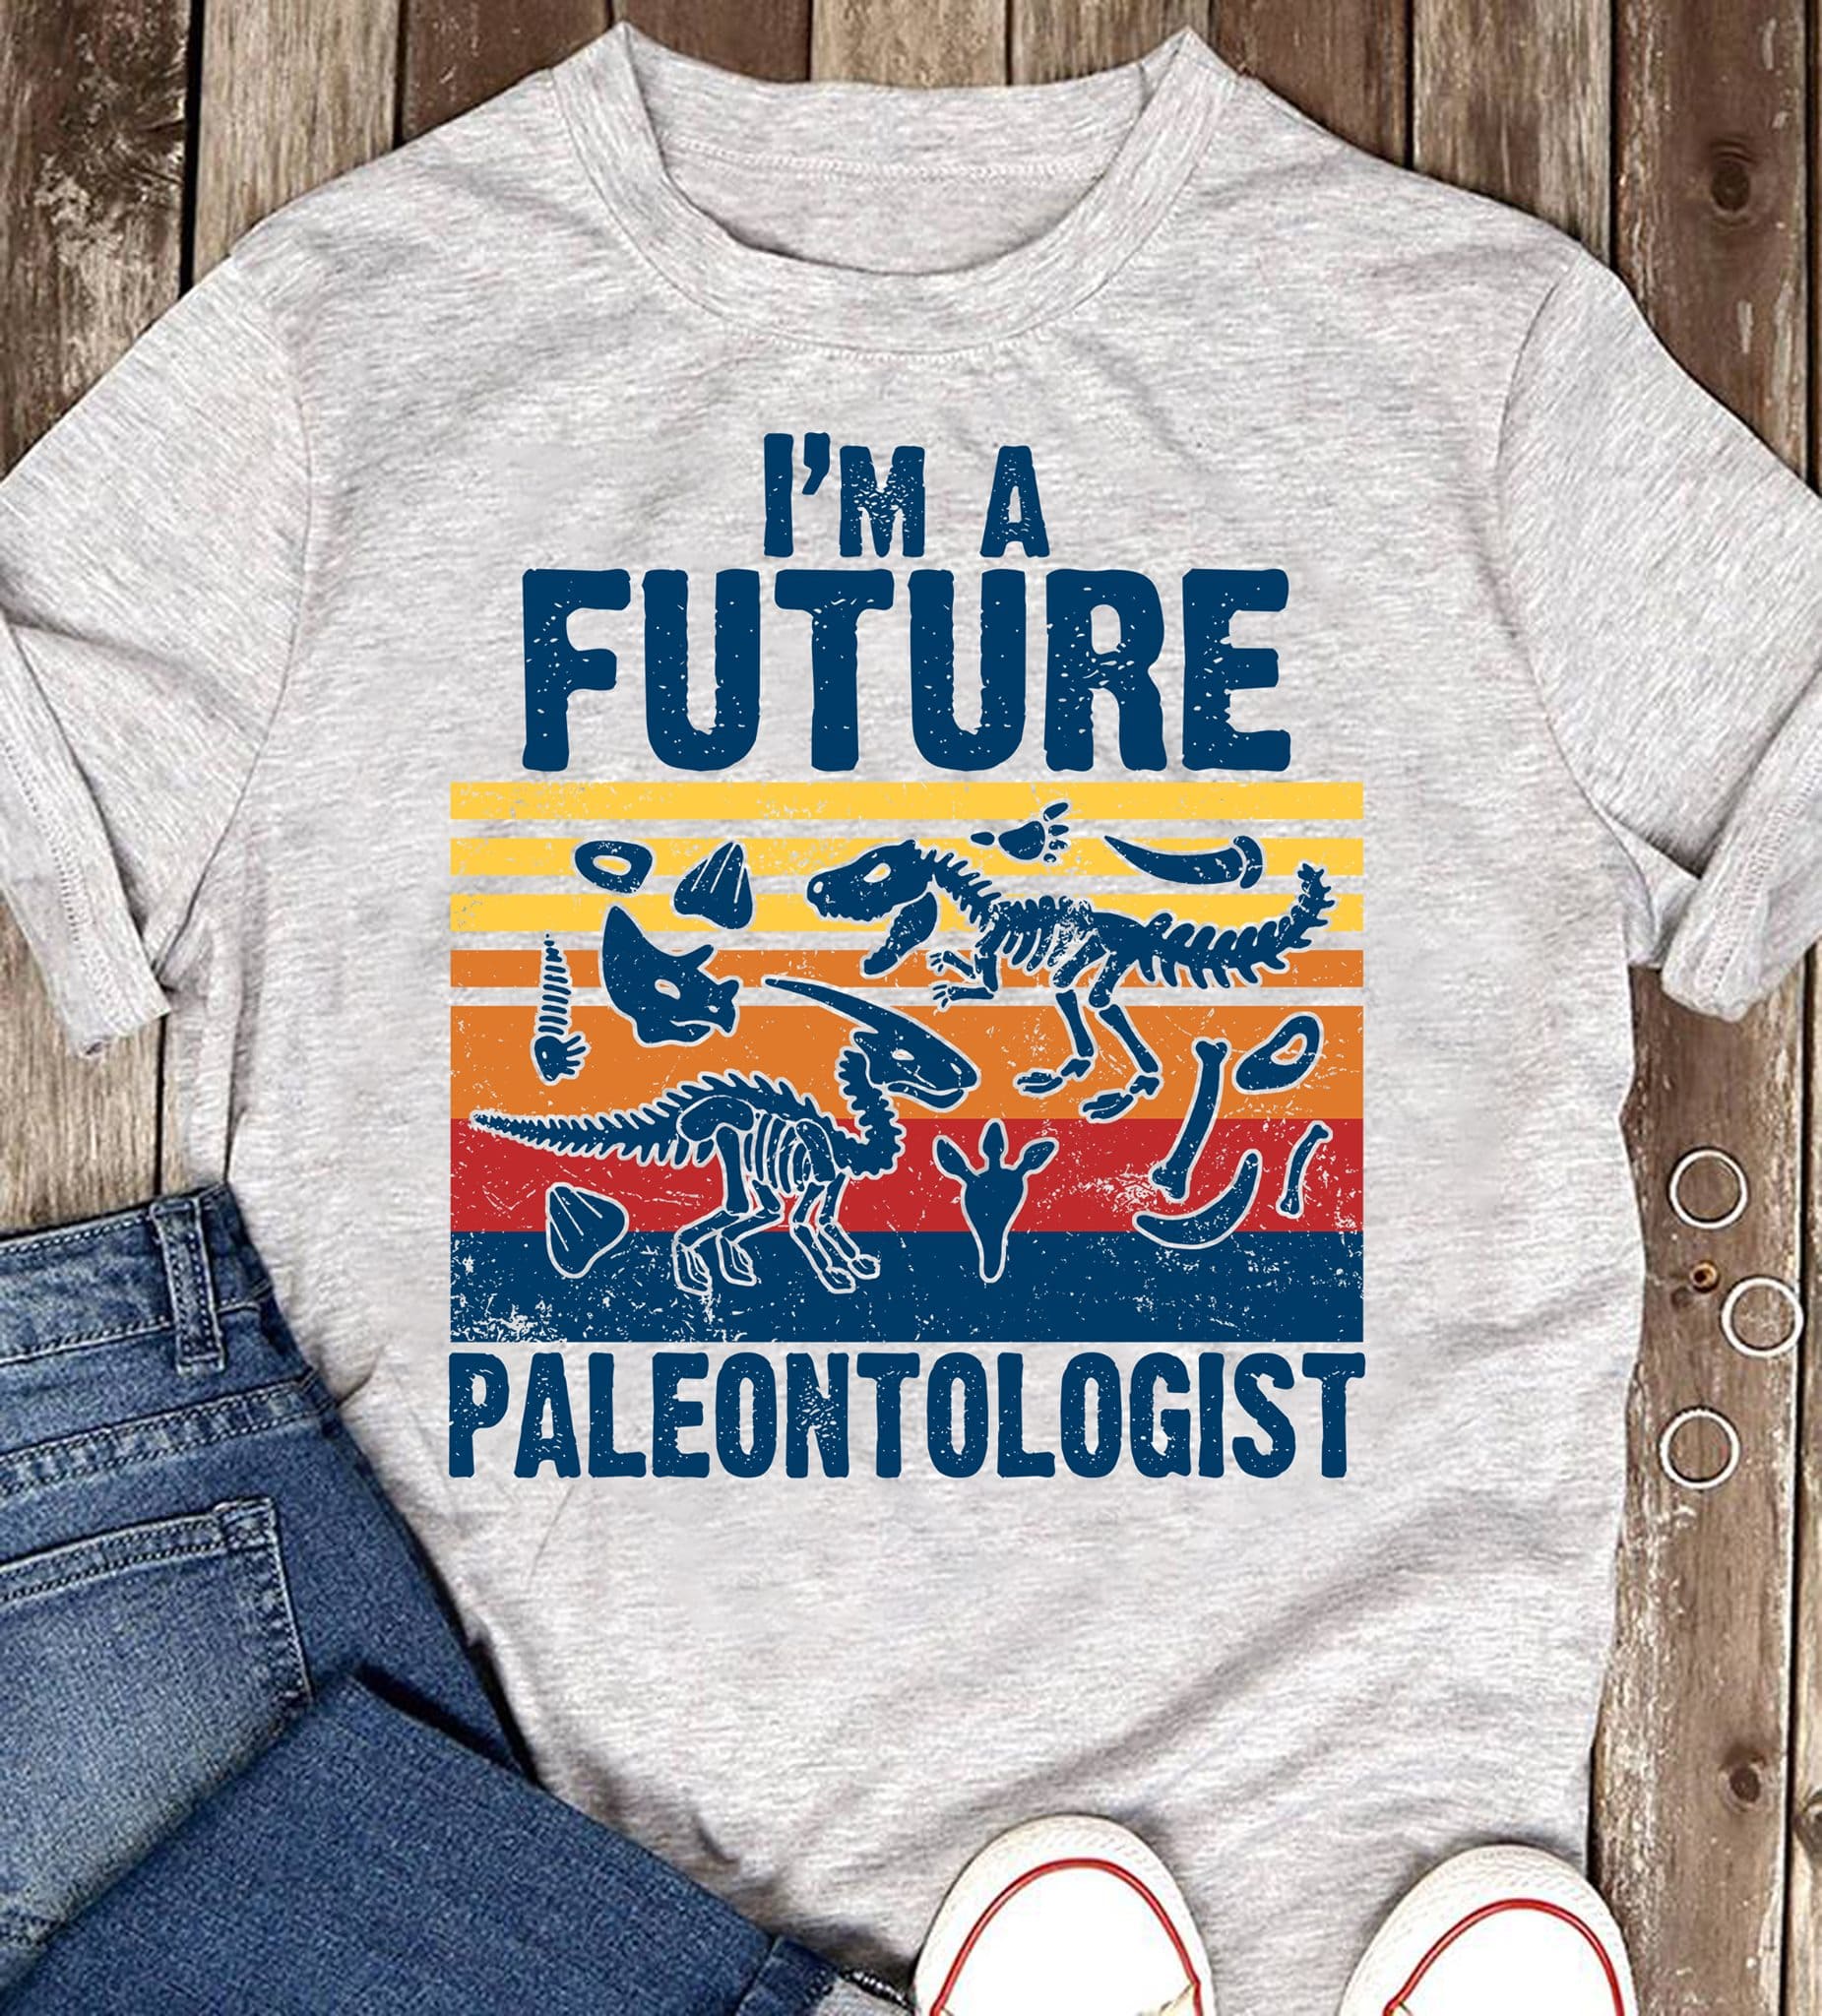 I'm a future paleontologist - Dinosaur bone, Dinosaur paleontologist